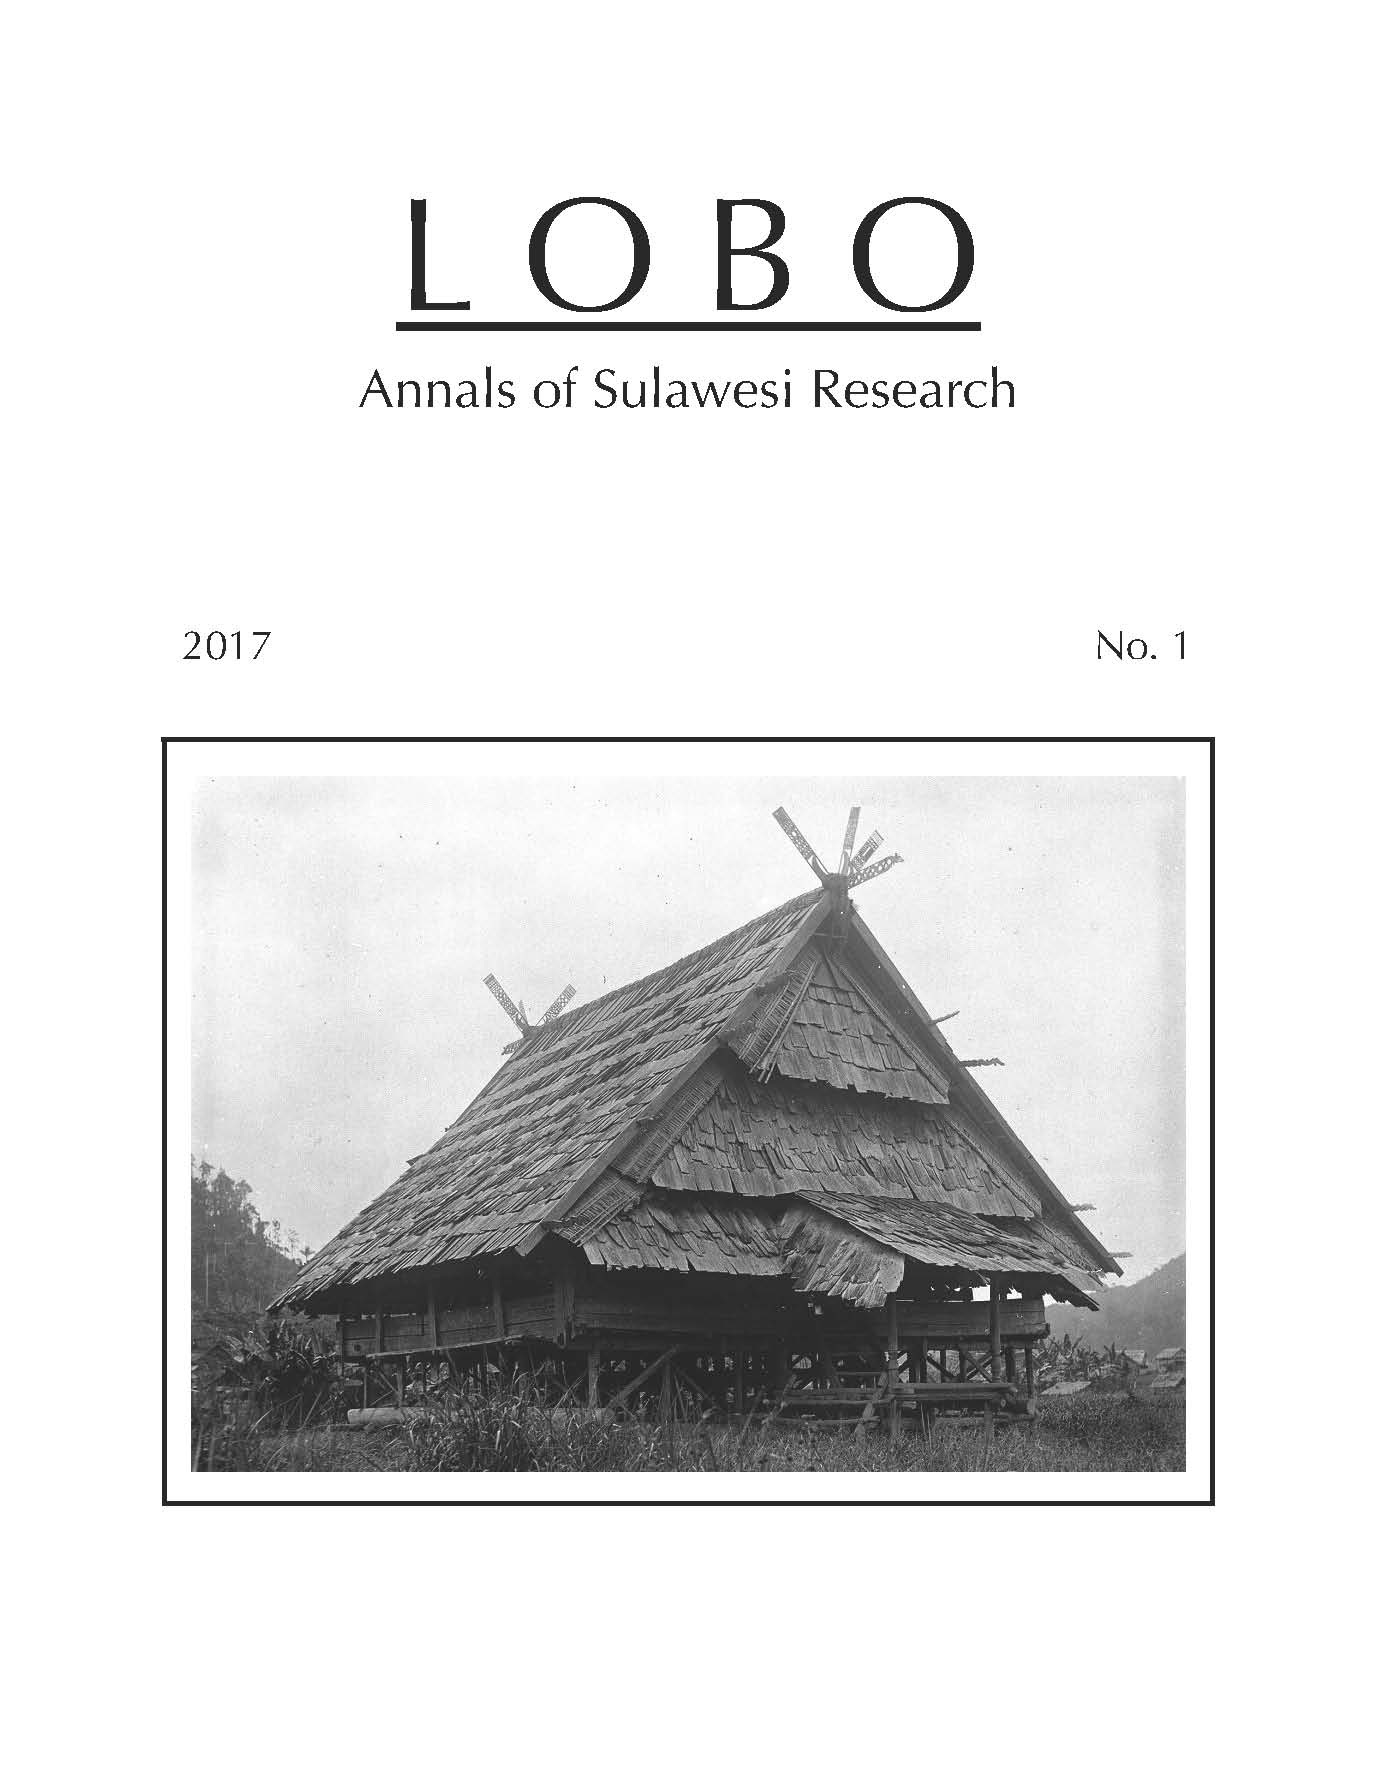 					View Vol. 1 (2017): Kamus Bahasa Pamona-Indonesia oleh Bapak Dj. Tiladuru (Pamona - Indonesia Dictionary)
				